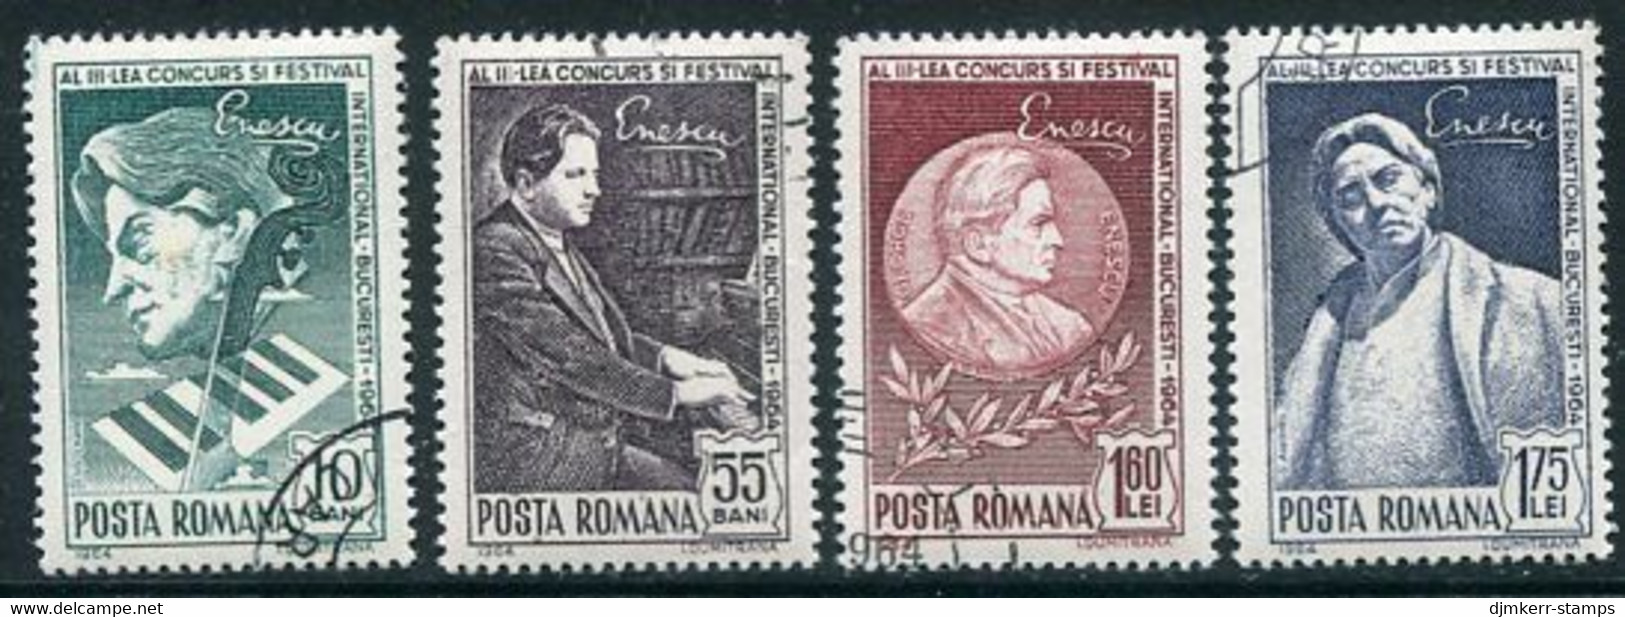 ROMANIA 1964 Enescu Music Competition Used.  Michel 2326-29 - Usado